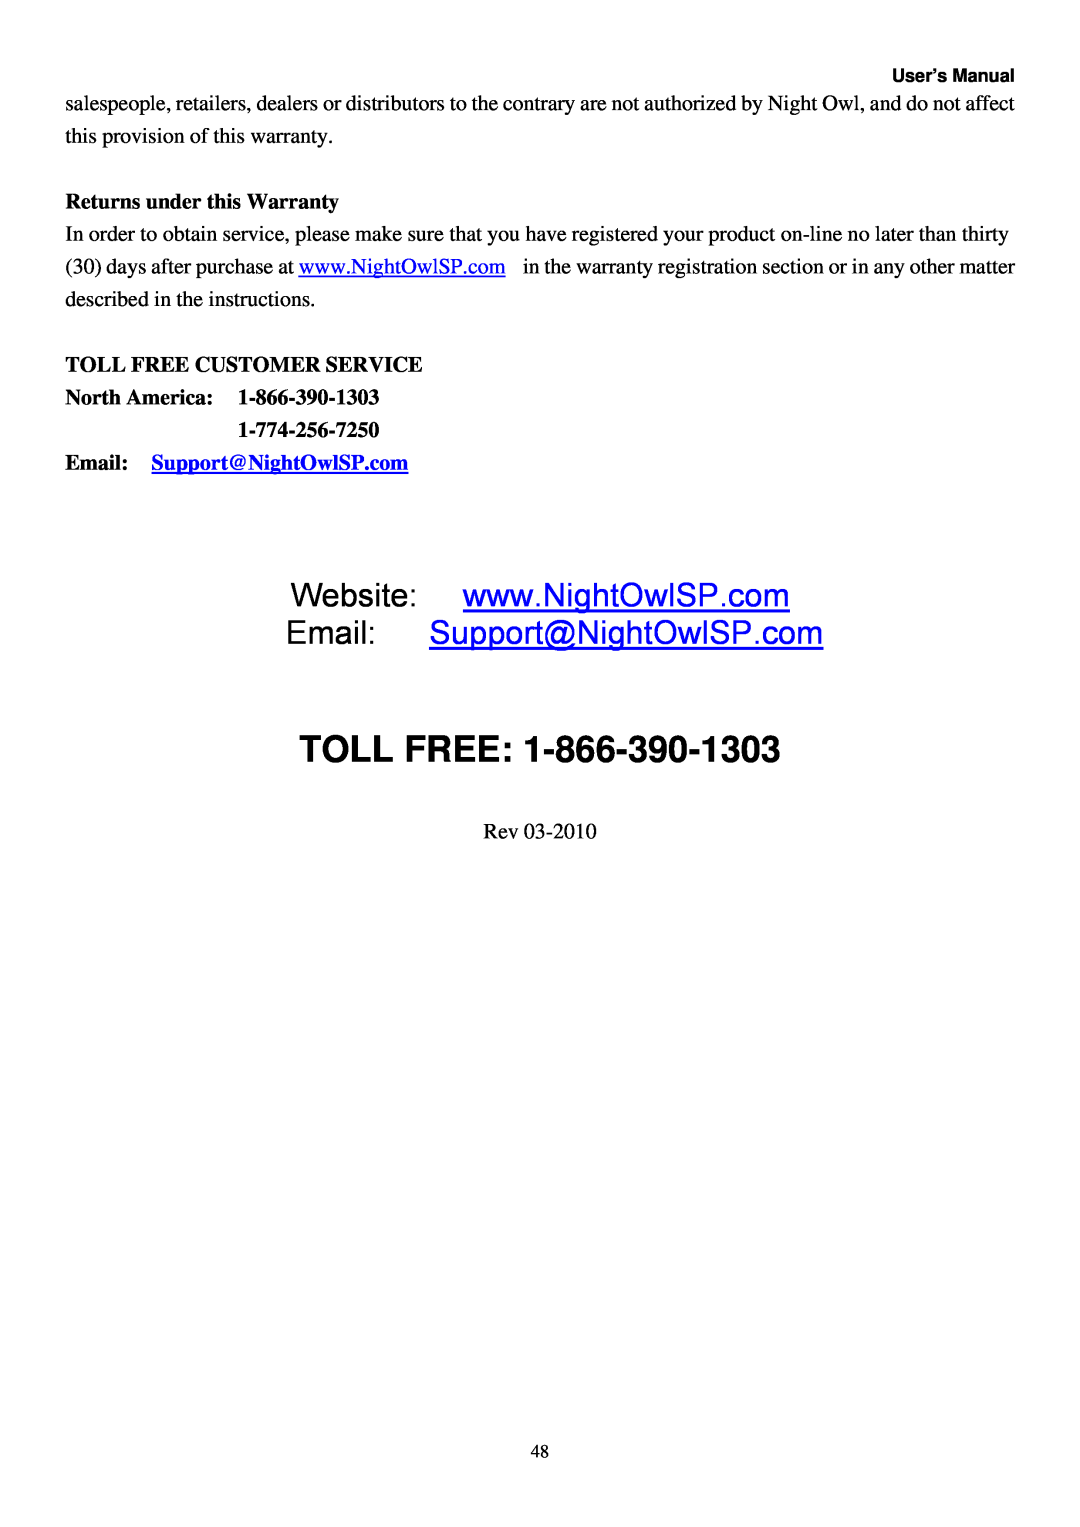 Night Owl Optics Night Owl, 4BL manual Returns under this Warranty, TOLL FREE CUSTOMER SERVICE North America, Toll Free 